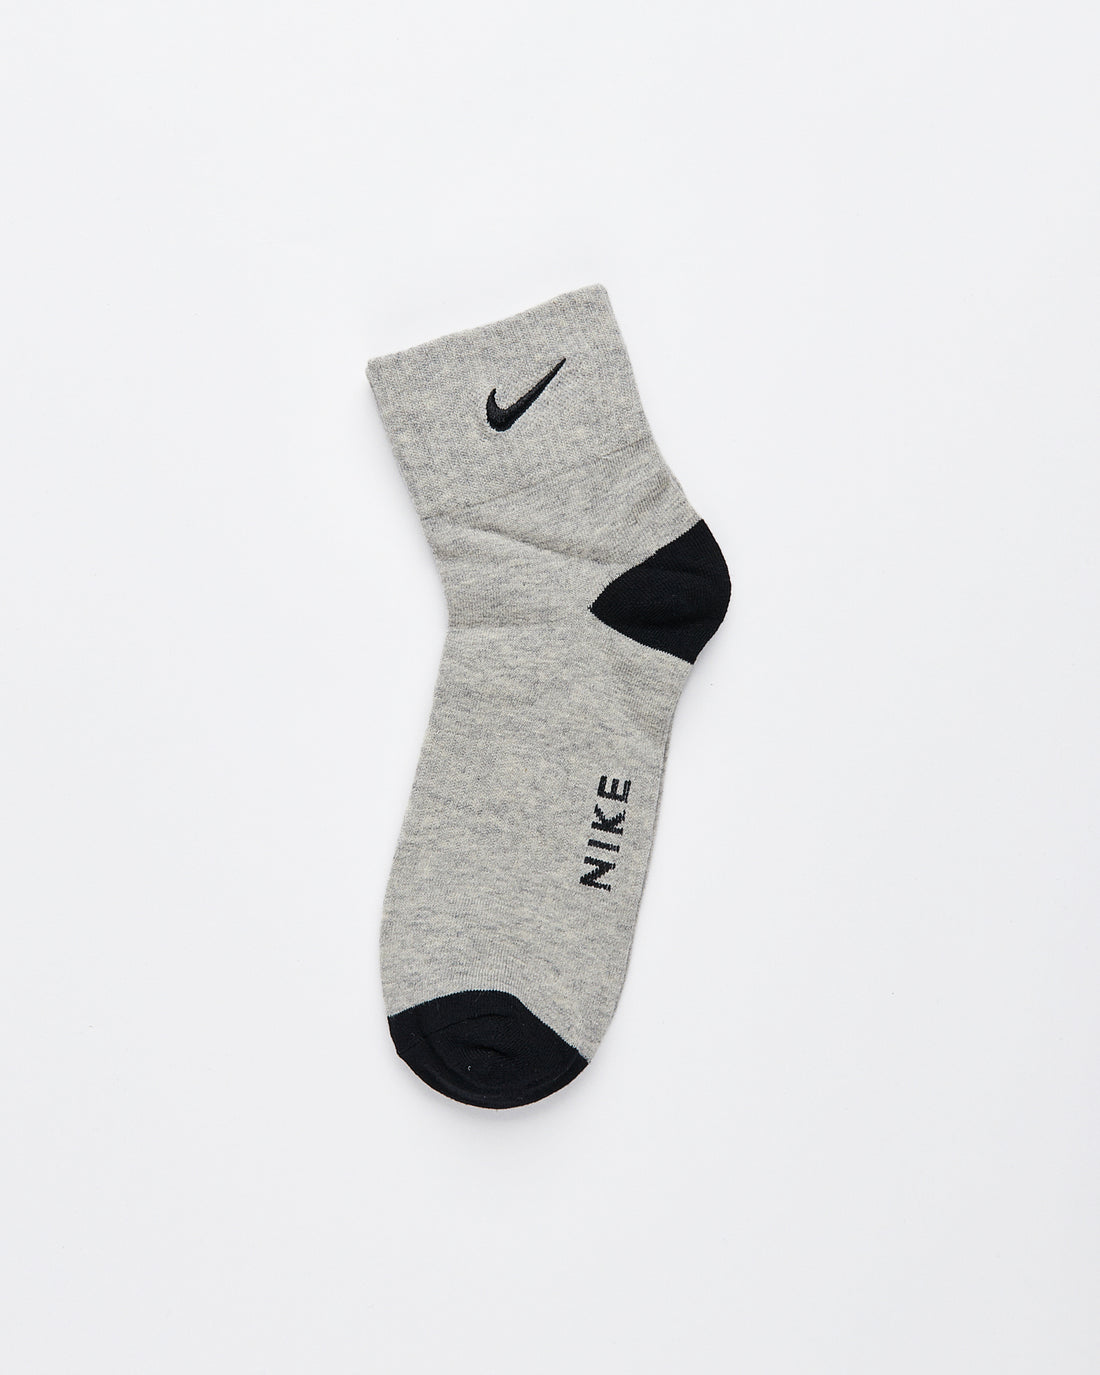 NIK Grey 1 Pairs Quarter Socks 2.10